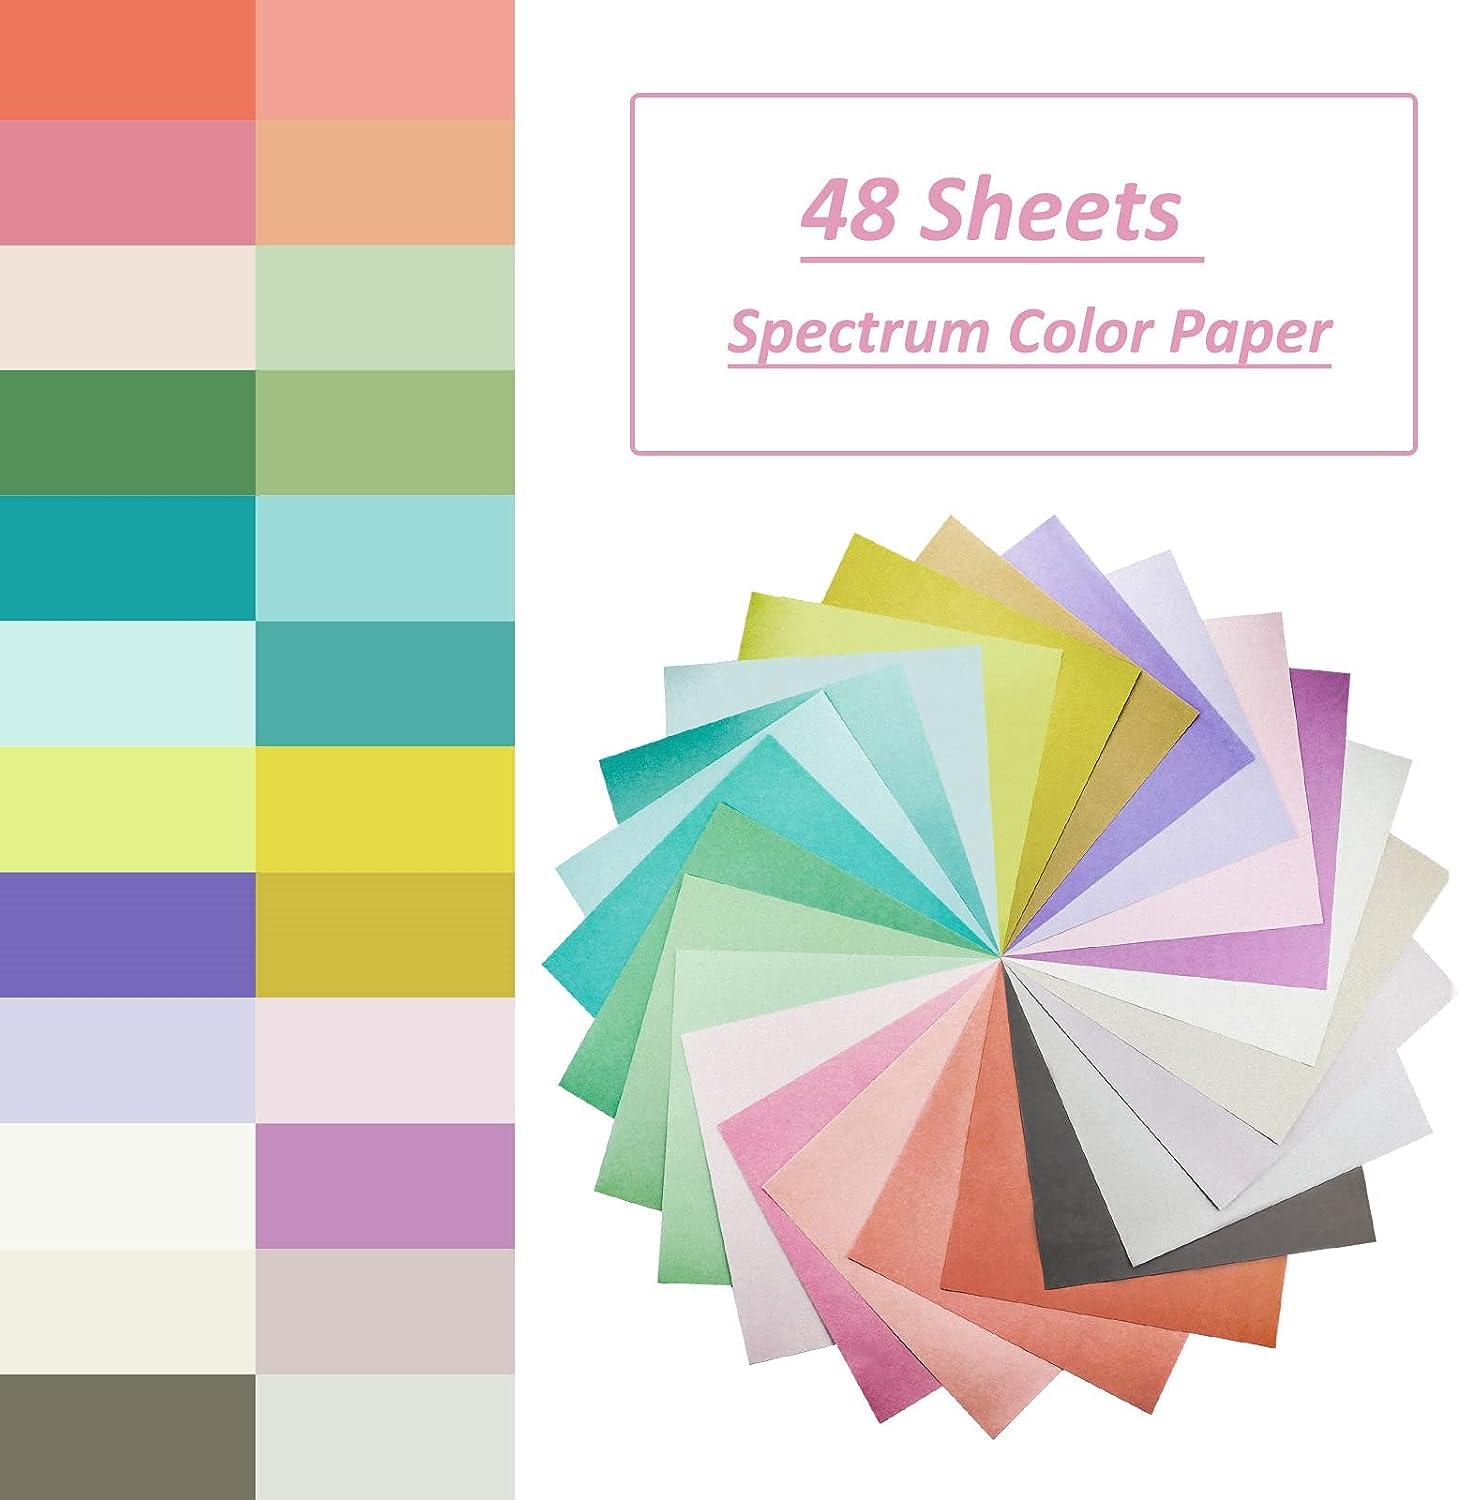 12x12 Digital Paper - Rainbow: Pastel